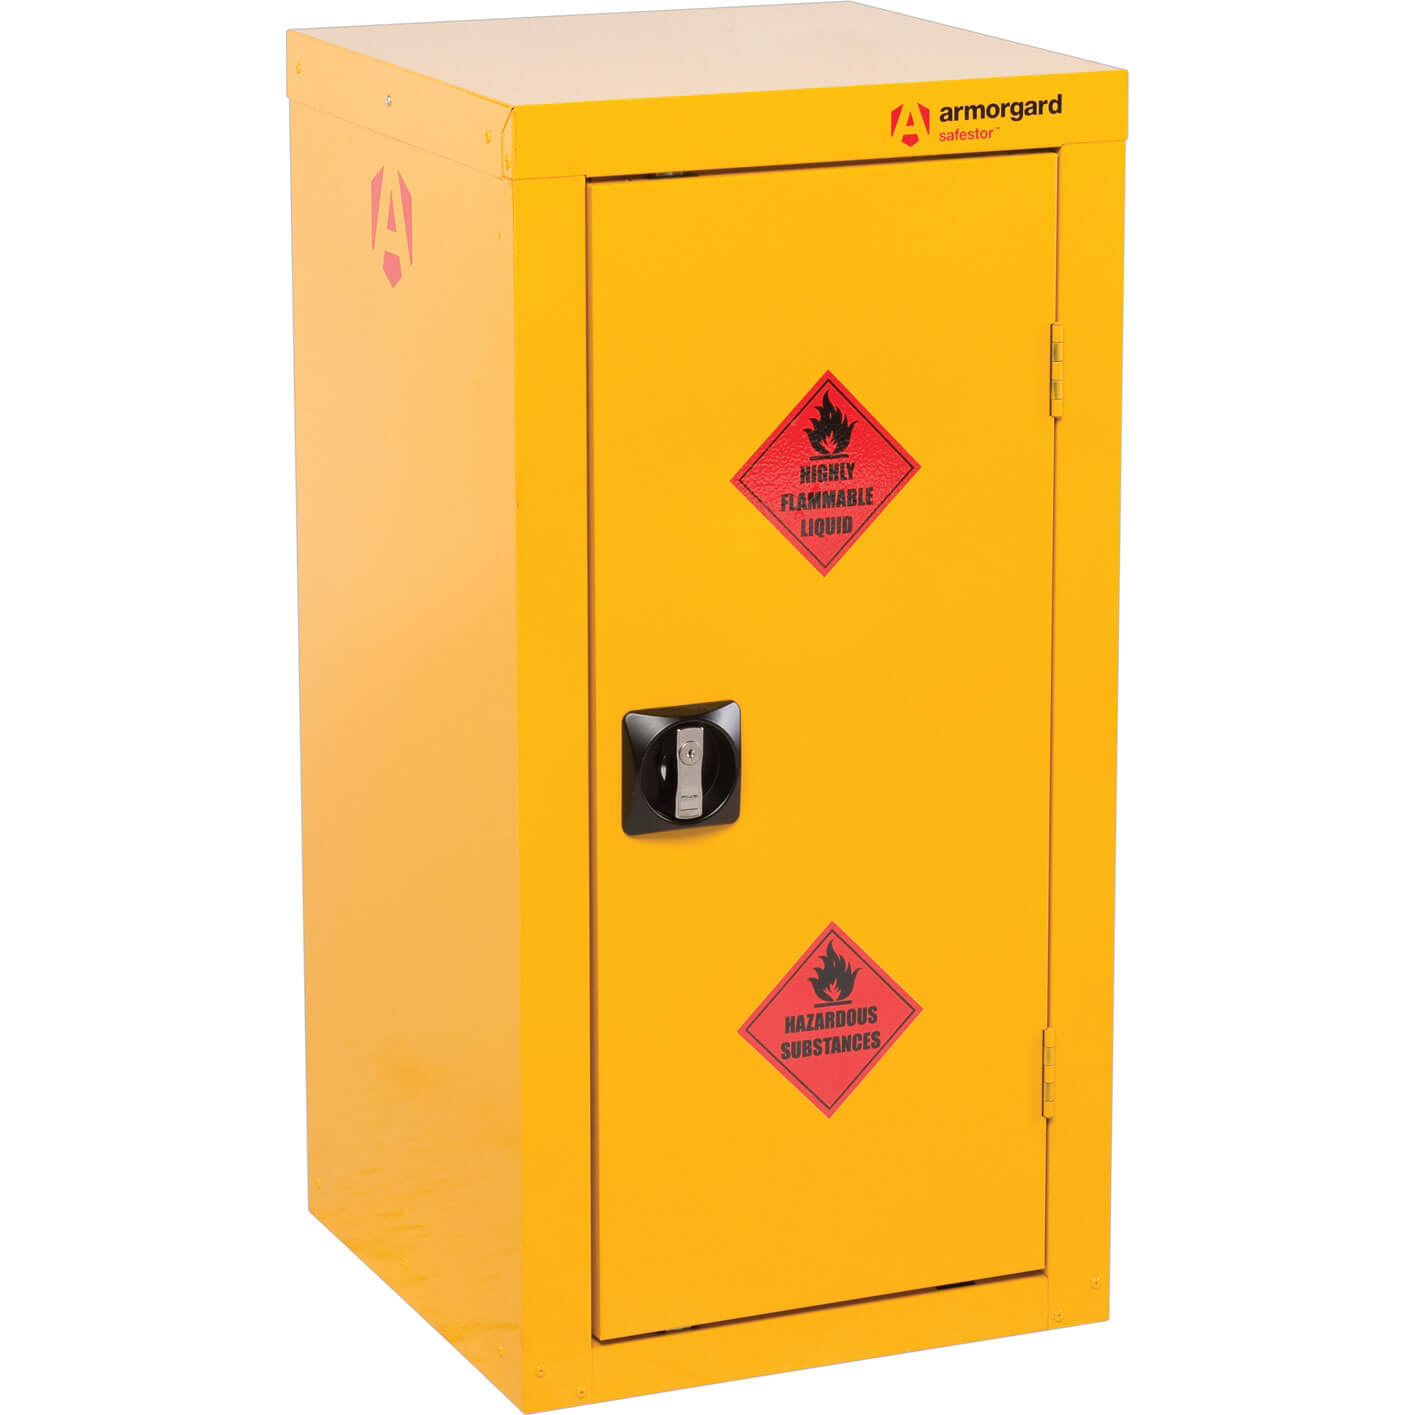 Image of Armorgard Safestor Hazardous Materials Secure Storage Cabinet 450mm 465mm 905mm